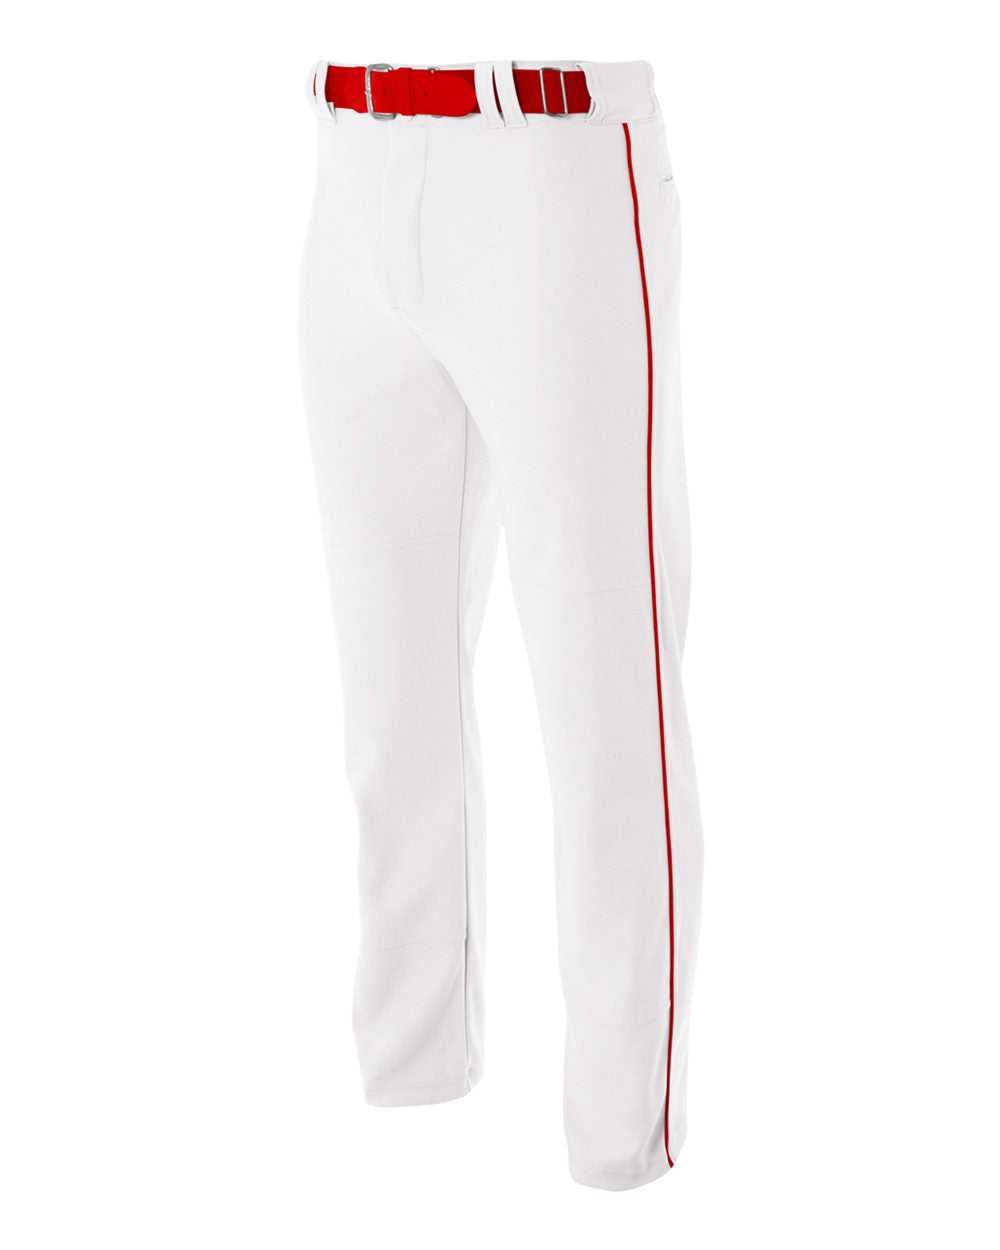 A4 N6162 Pro Style Open Bottom Baggy Cut Baseball Pant - White Scarlet - HIT a Double